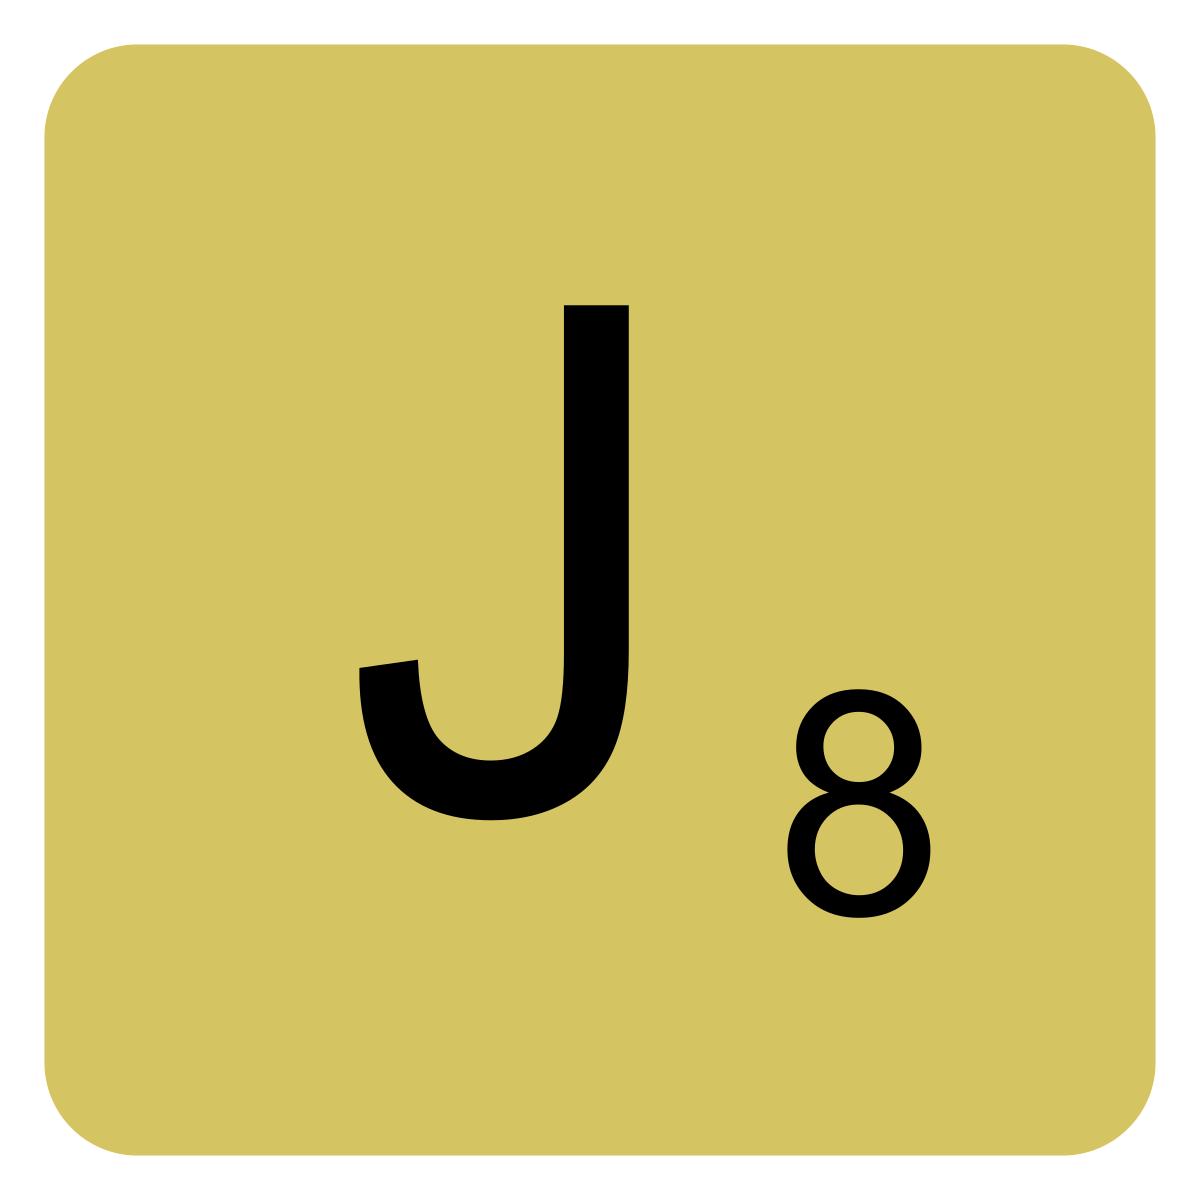 Download File:Scrabble letter J.svg - Wikimedia Commons